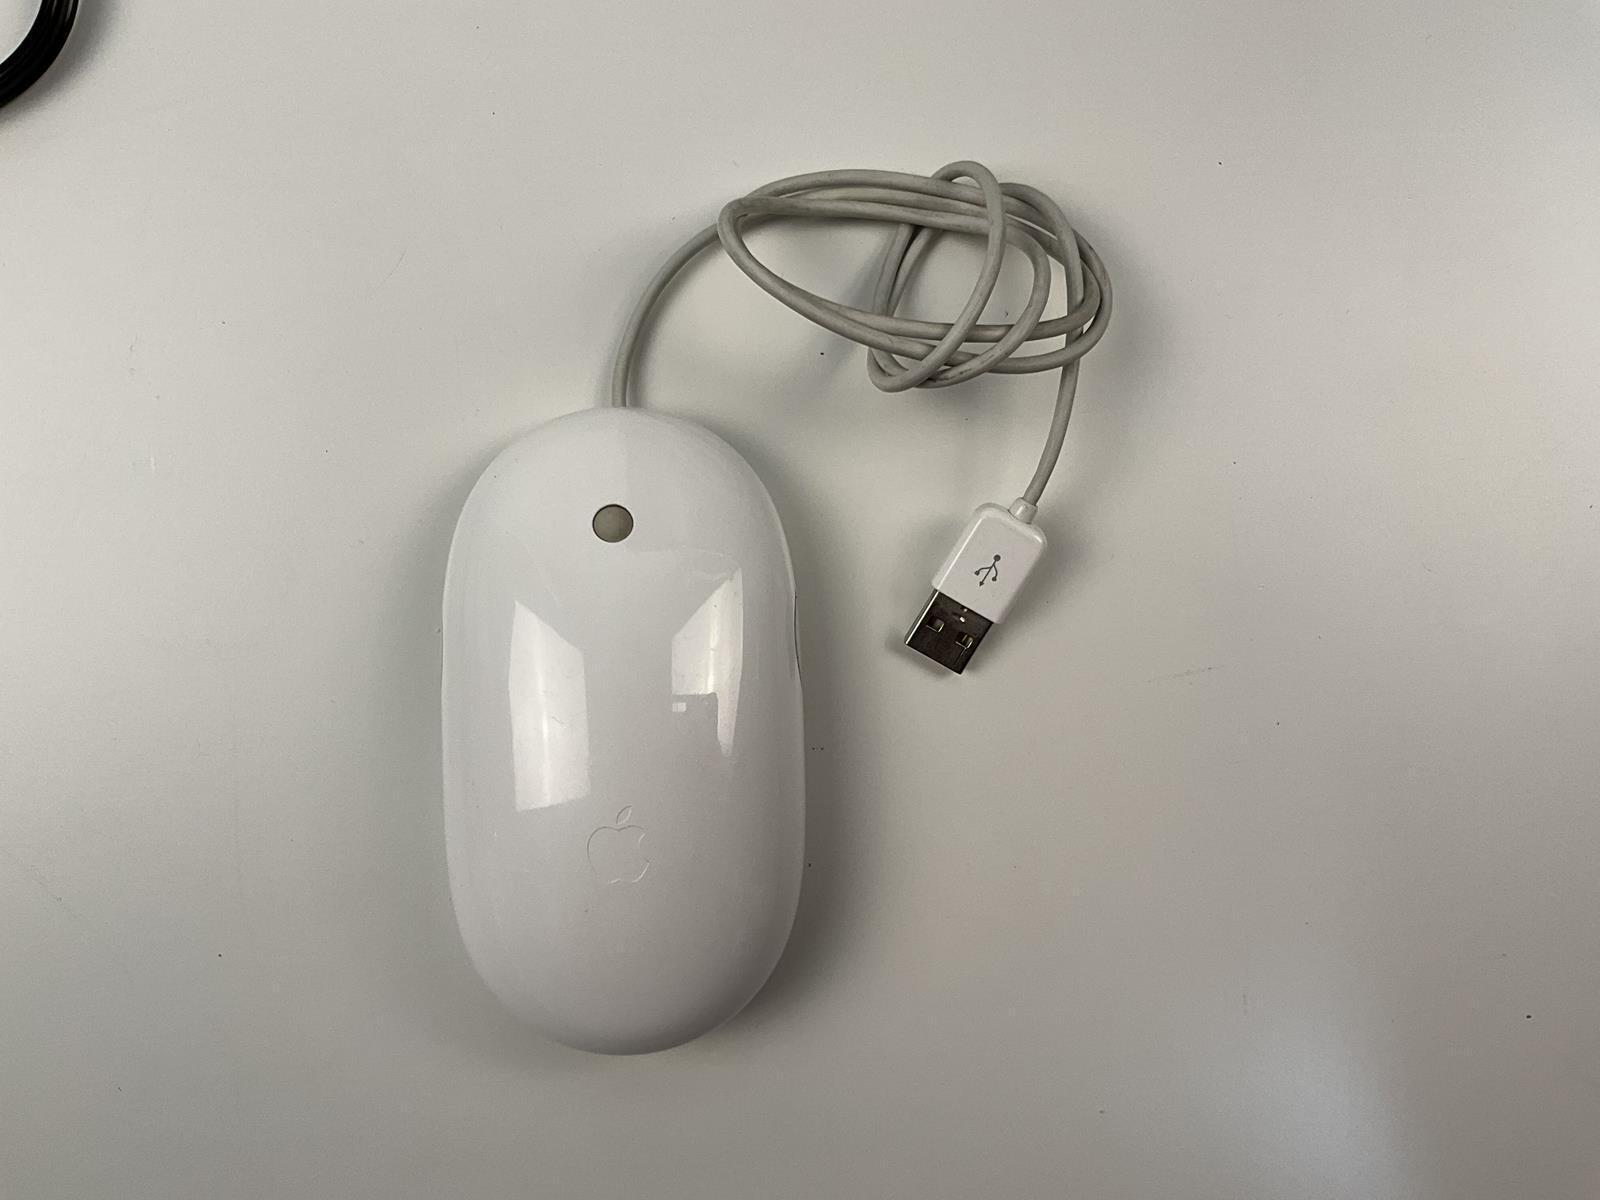 Apple A1152 Mouse